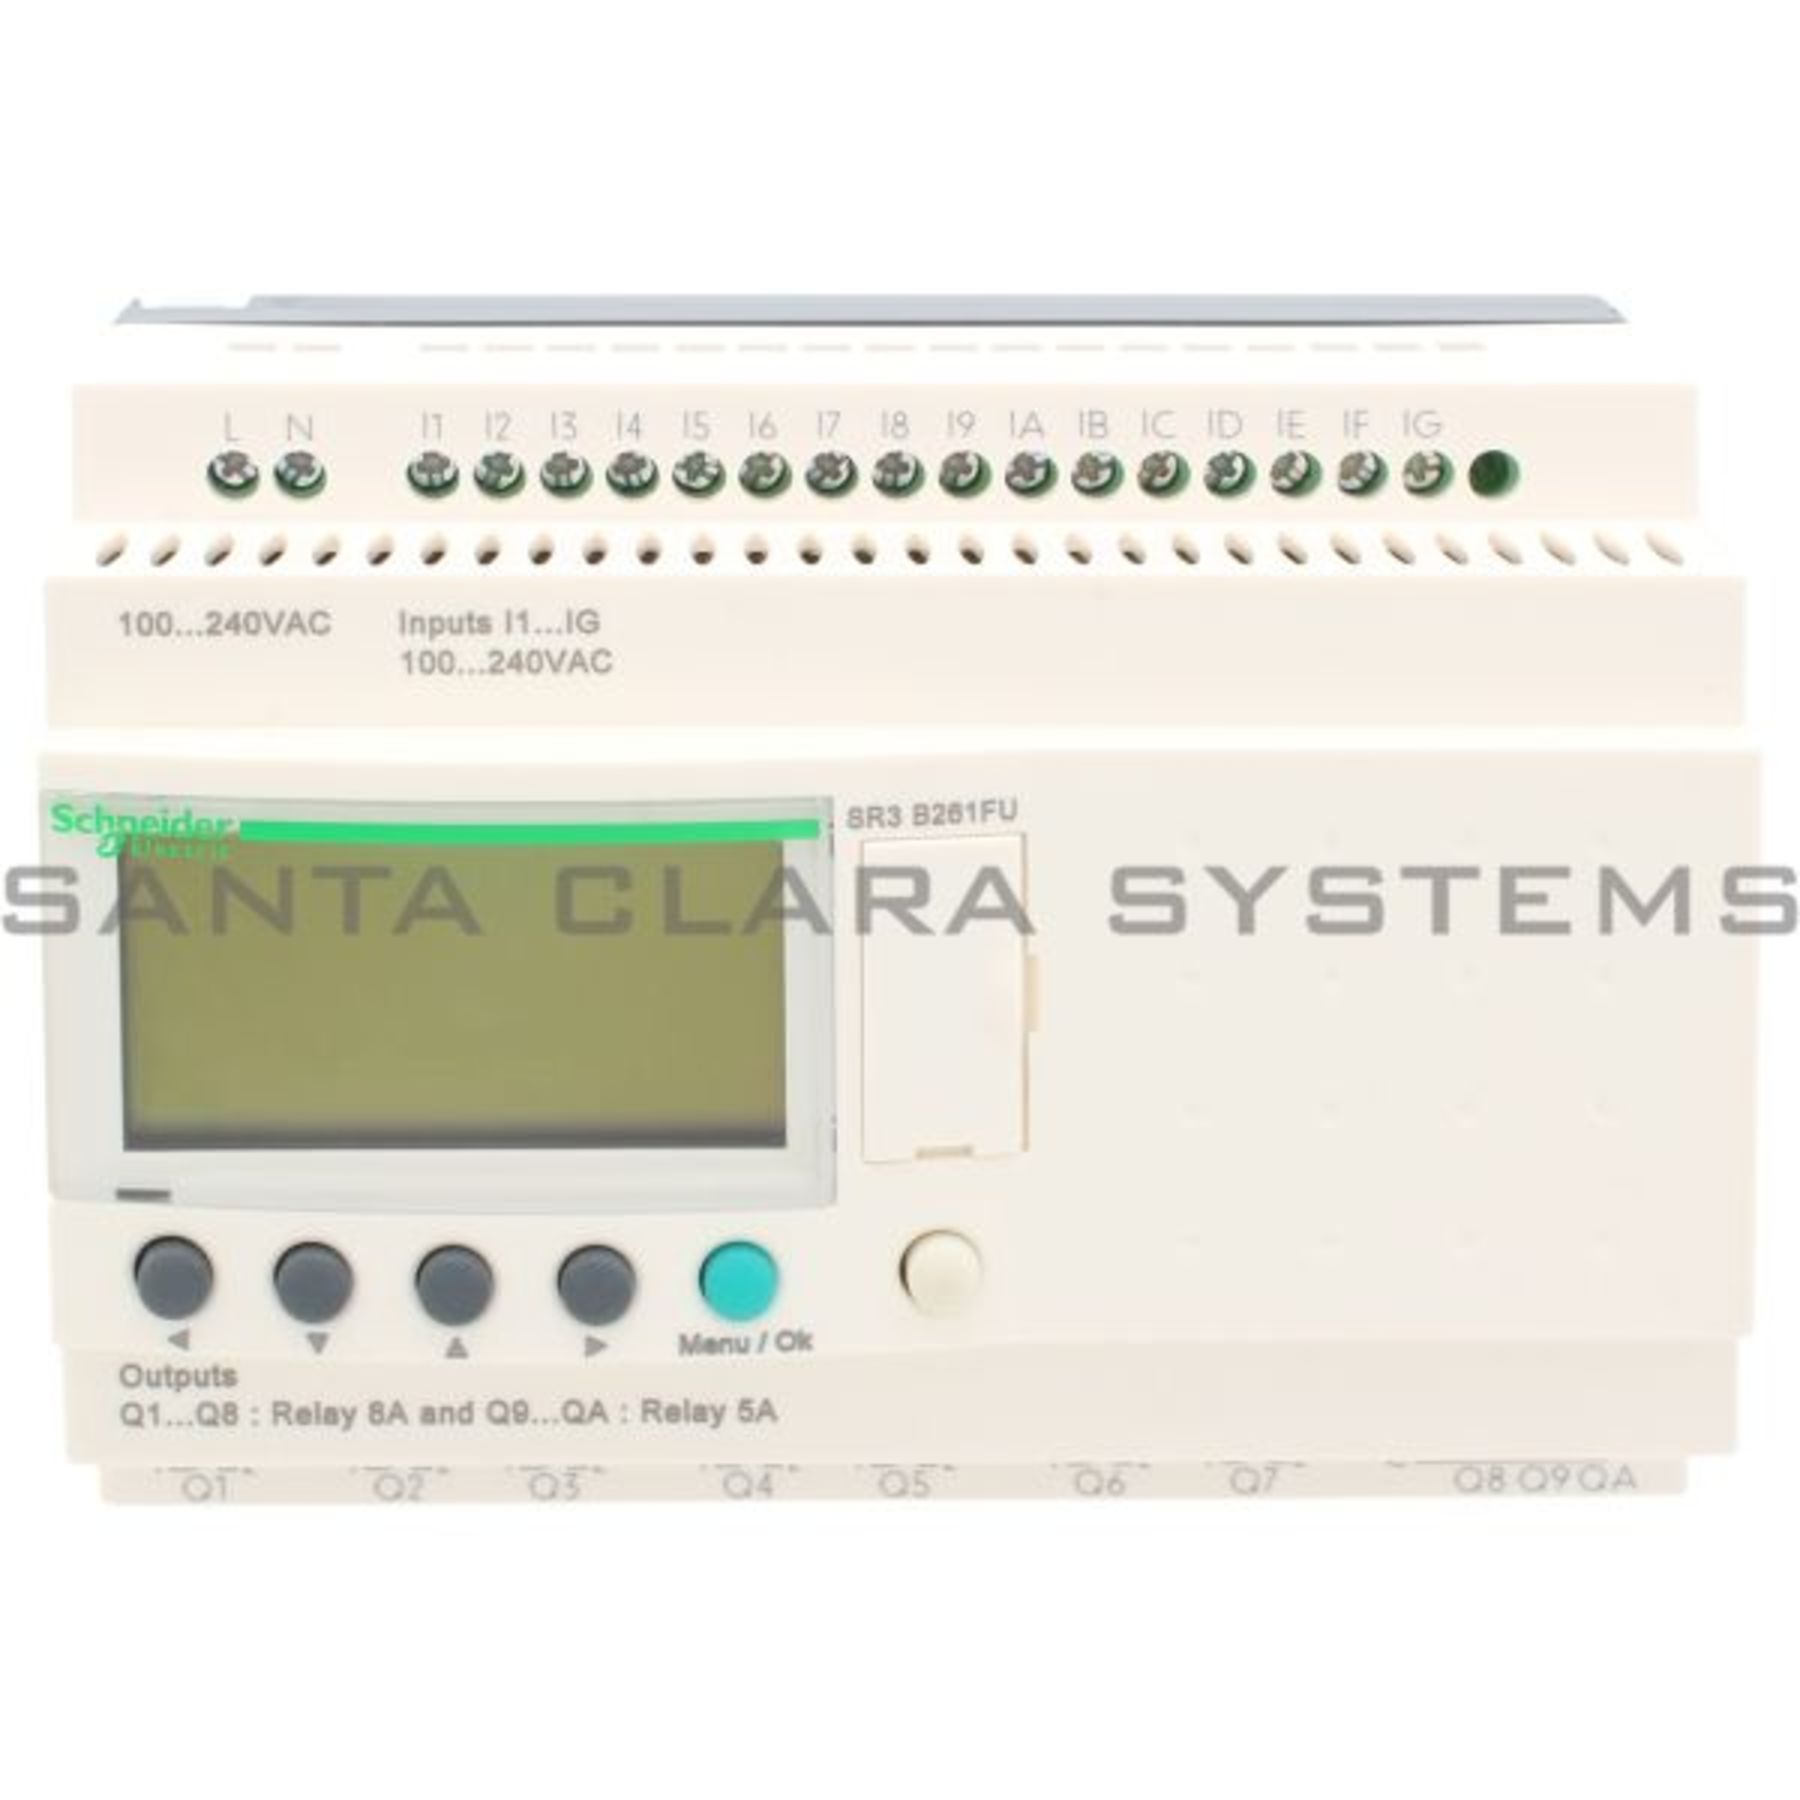 Sr3b261fu Modular Smart Relay Zelio Logic 26 I O 100 240 V Ac Clock Display Telemecanique In Stock Santa Clara Systems